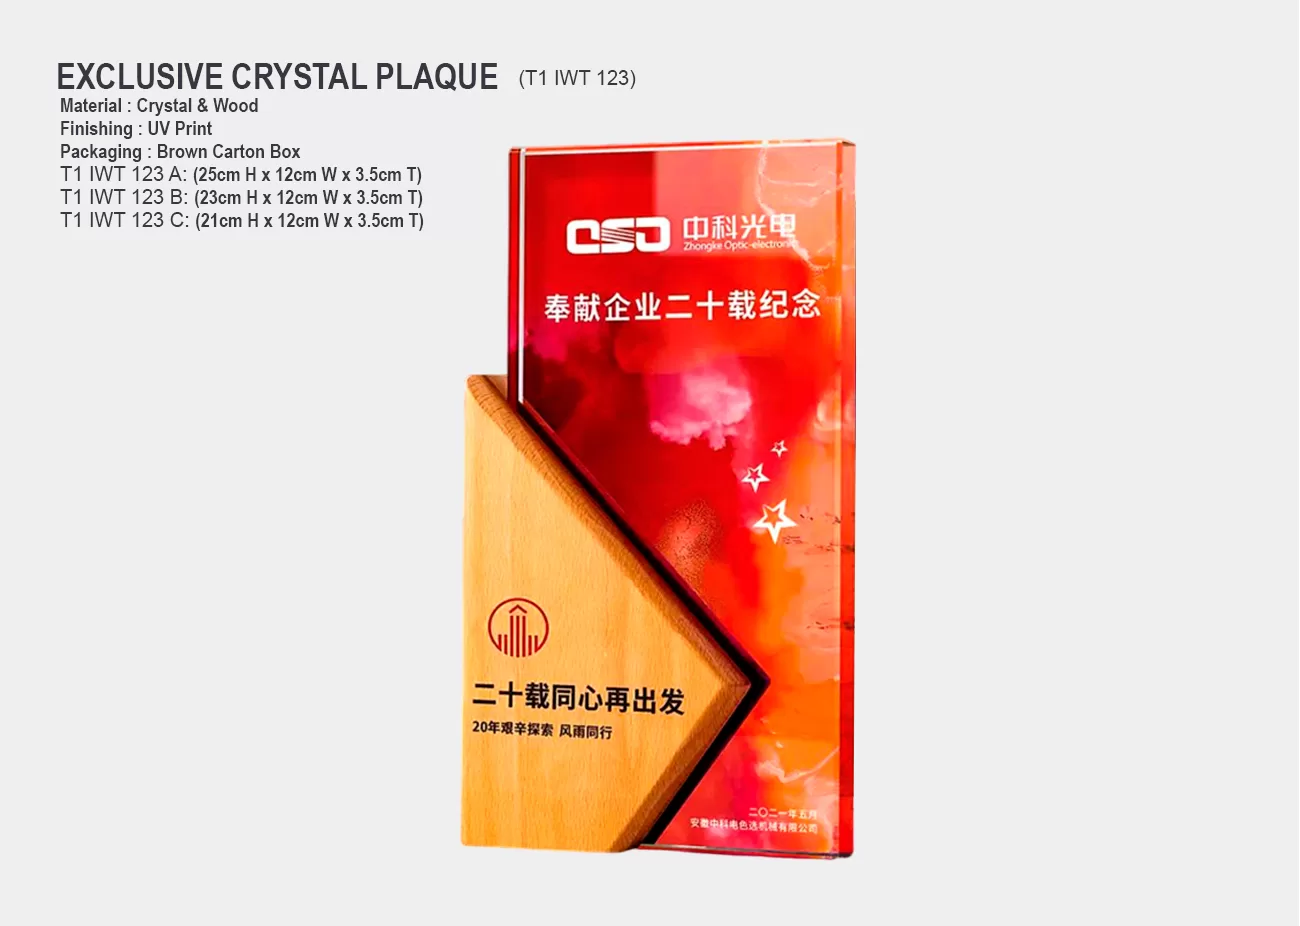 Crystal Plaque Award